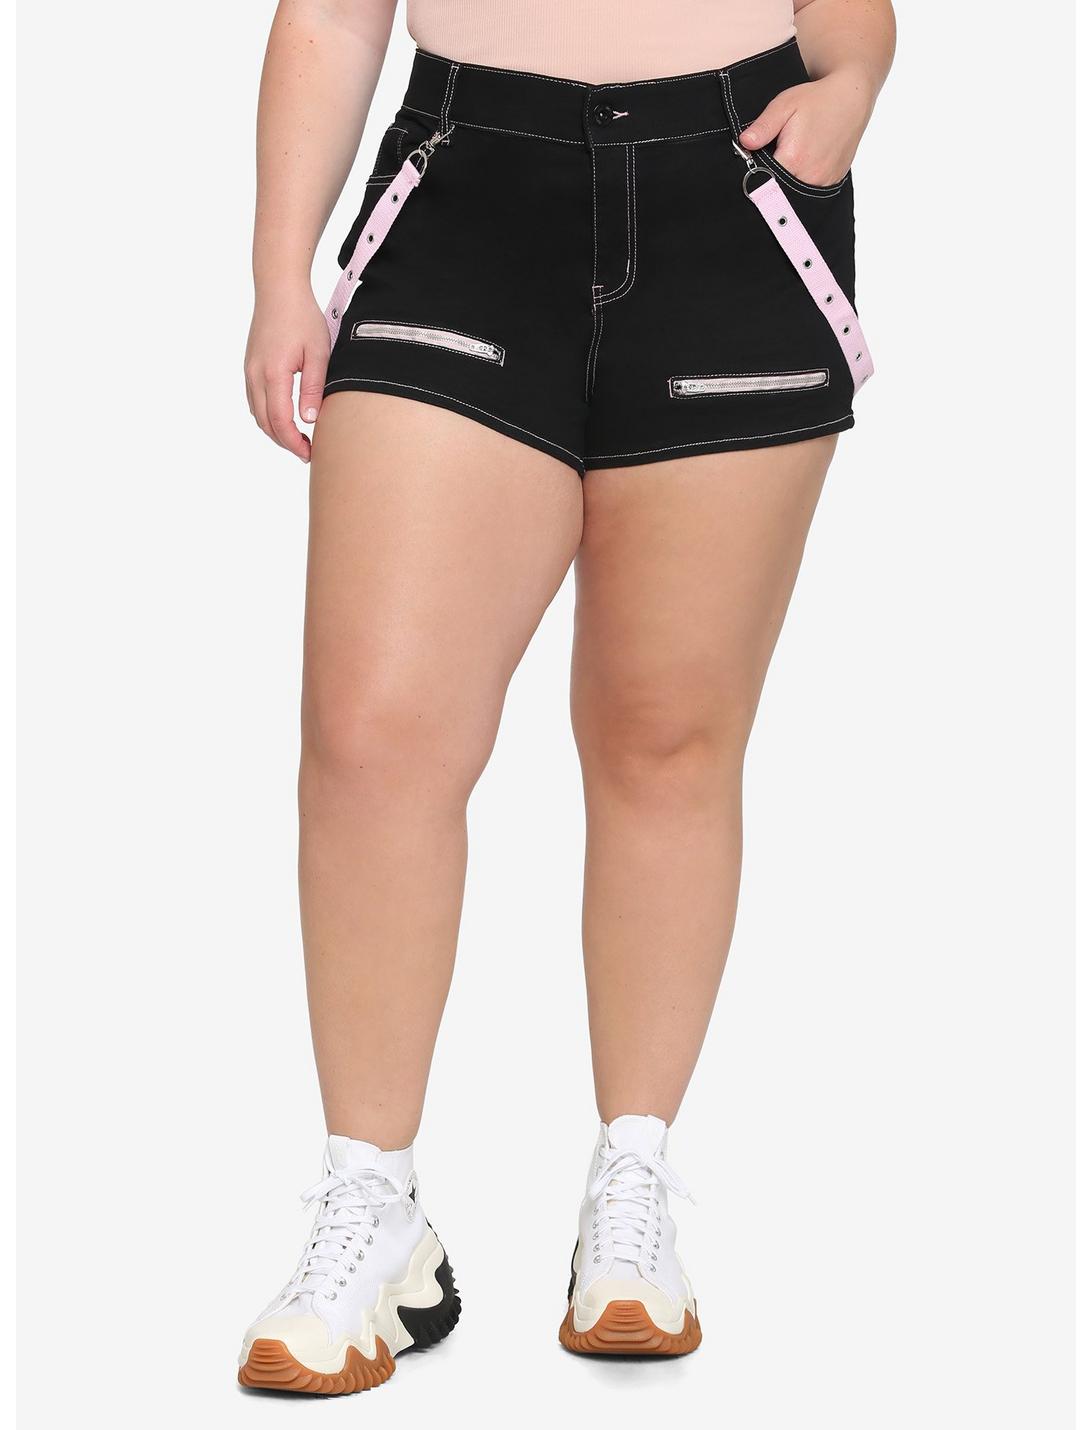 Black & Pink Suspender Shorts Plus Size, BLACK, hi-res